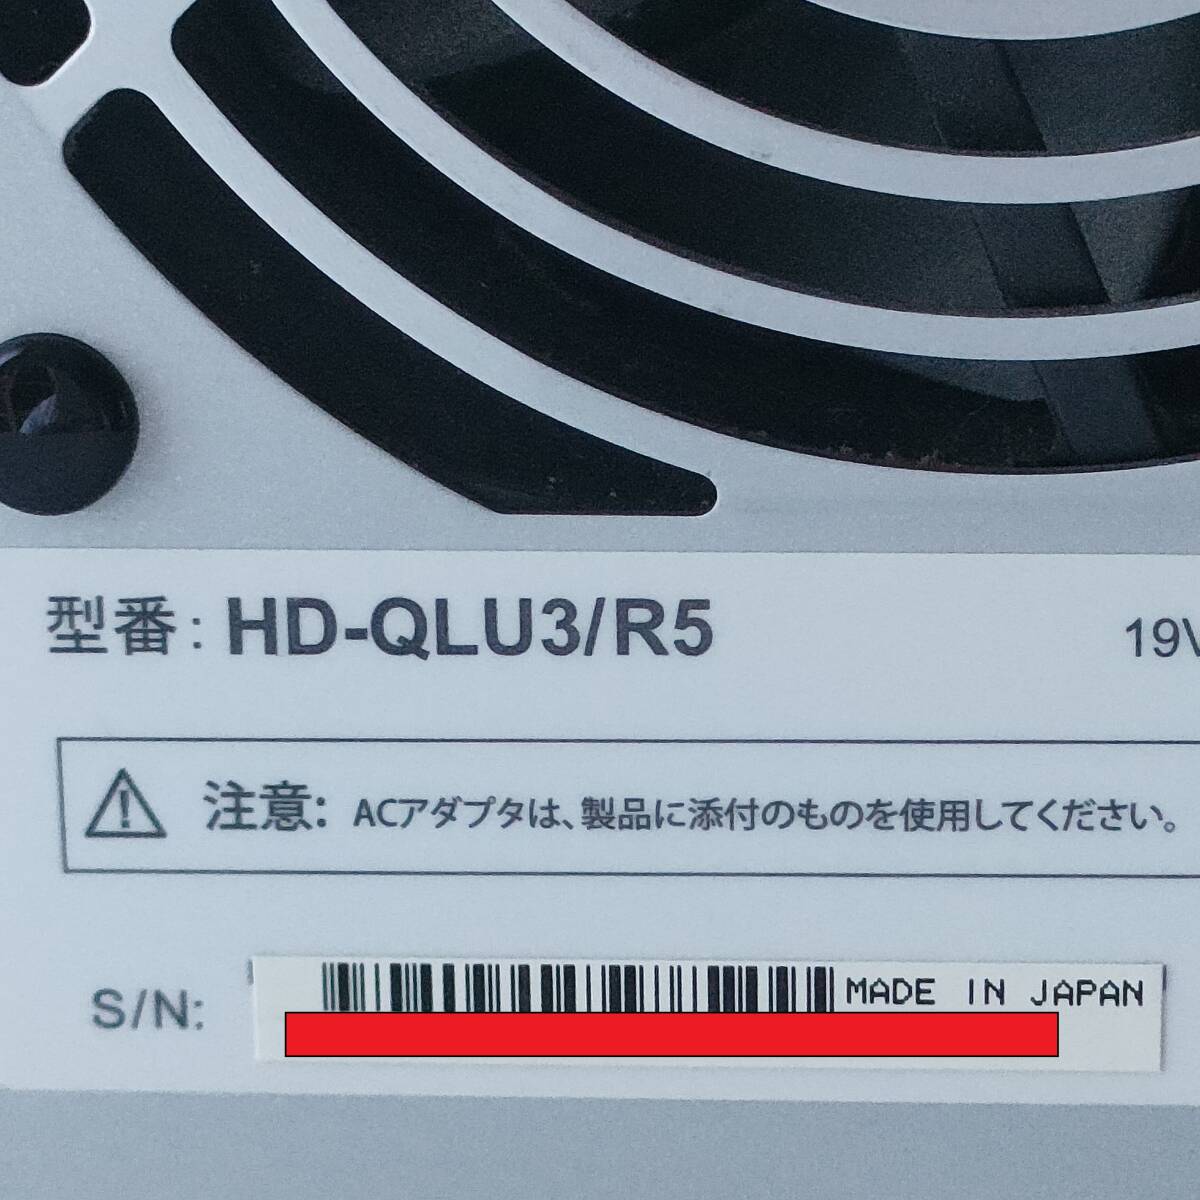 ★BUFFARO★ DriveStationHD-QL16TU3/R5J ★ケース4ドライブモデル★ ぬけがら　★ HDD無し★ バッファロー 16TB ★_消しておりますがS/Nあります。